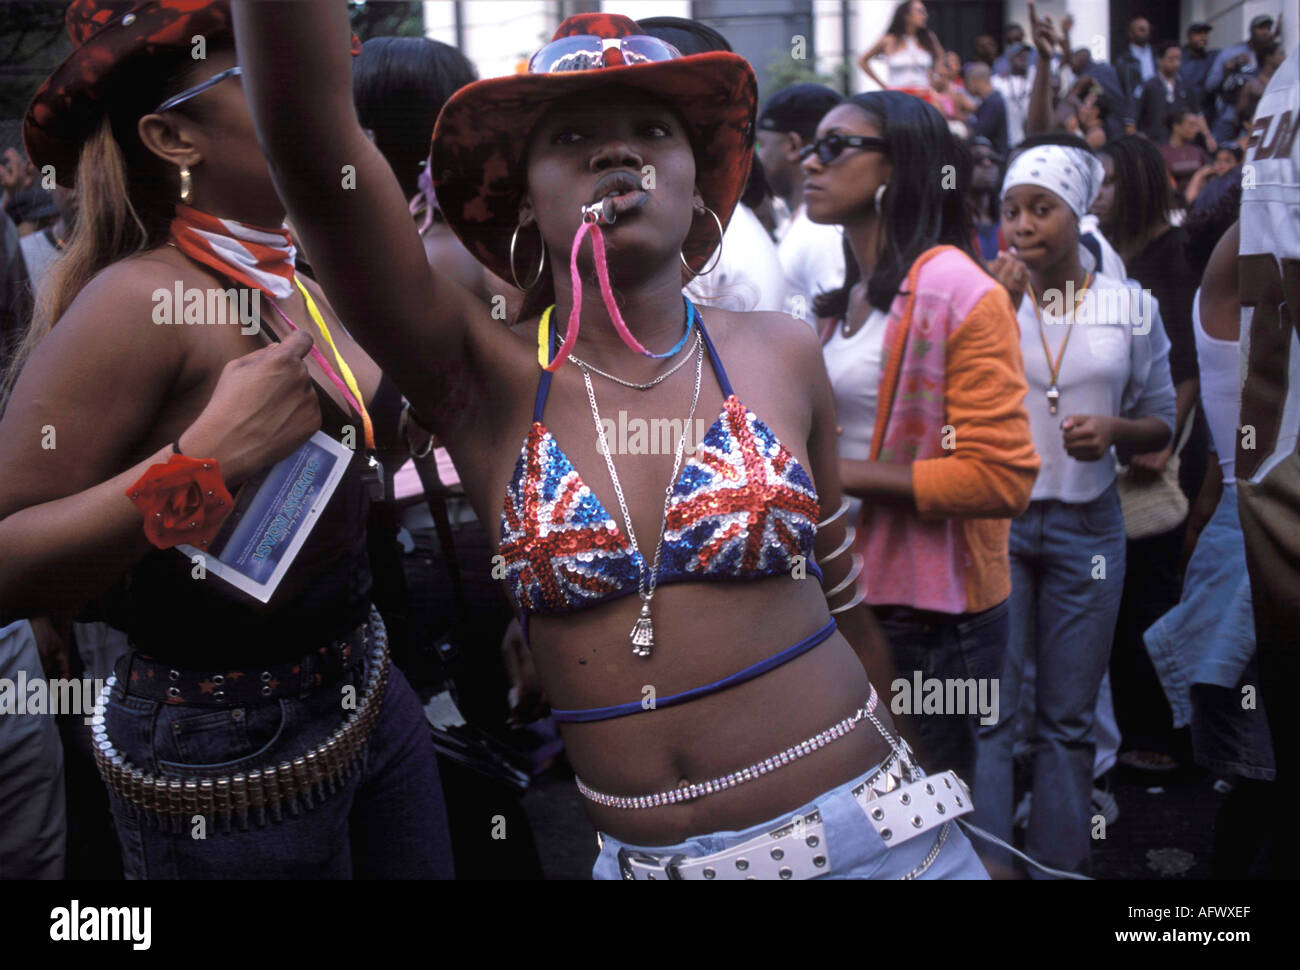 Black British 1990s teen teenager girl wearing Union Jack clothing bikini  bra top at the Notting Hill carnival London UK Teenage Identity HOMER SYKES  Stock Photo - Alamy